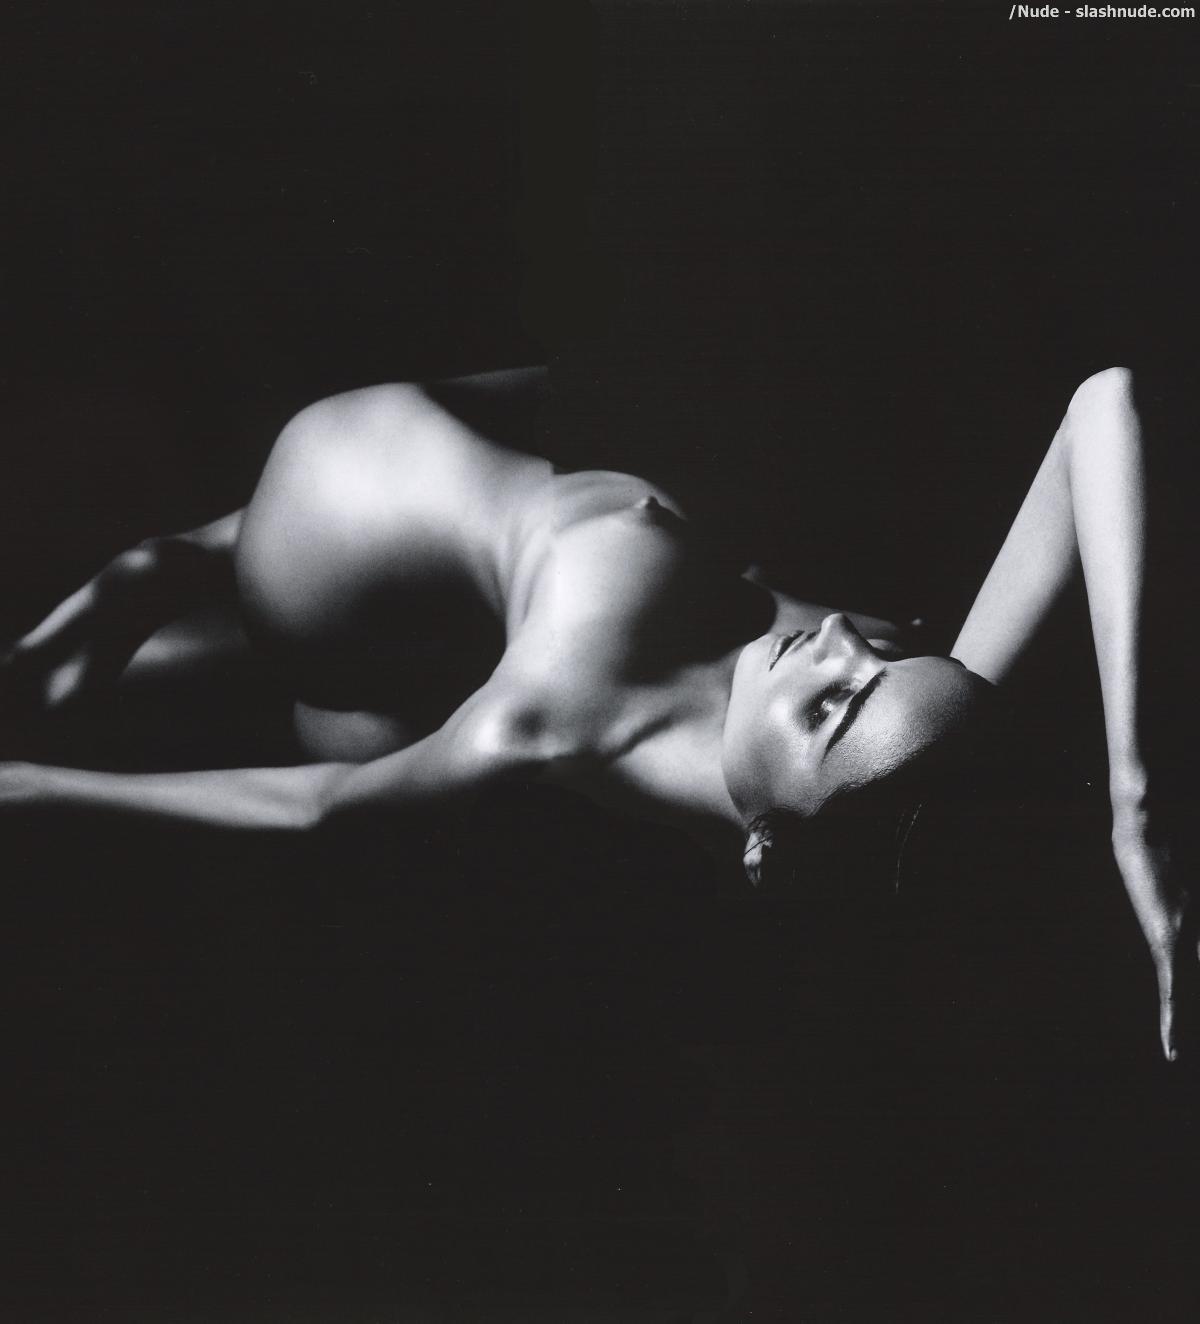 Miranda Kerr Nude And Shiny For Industrie Magazine 6